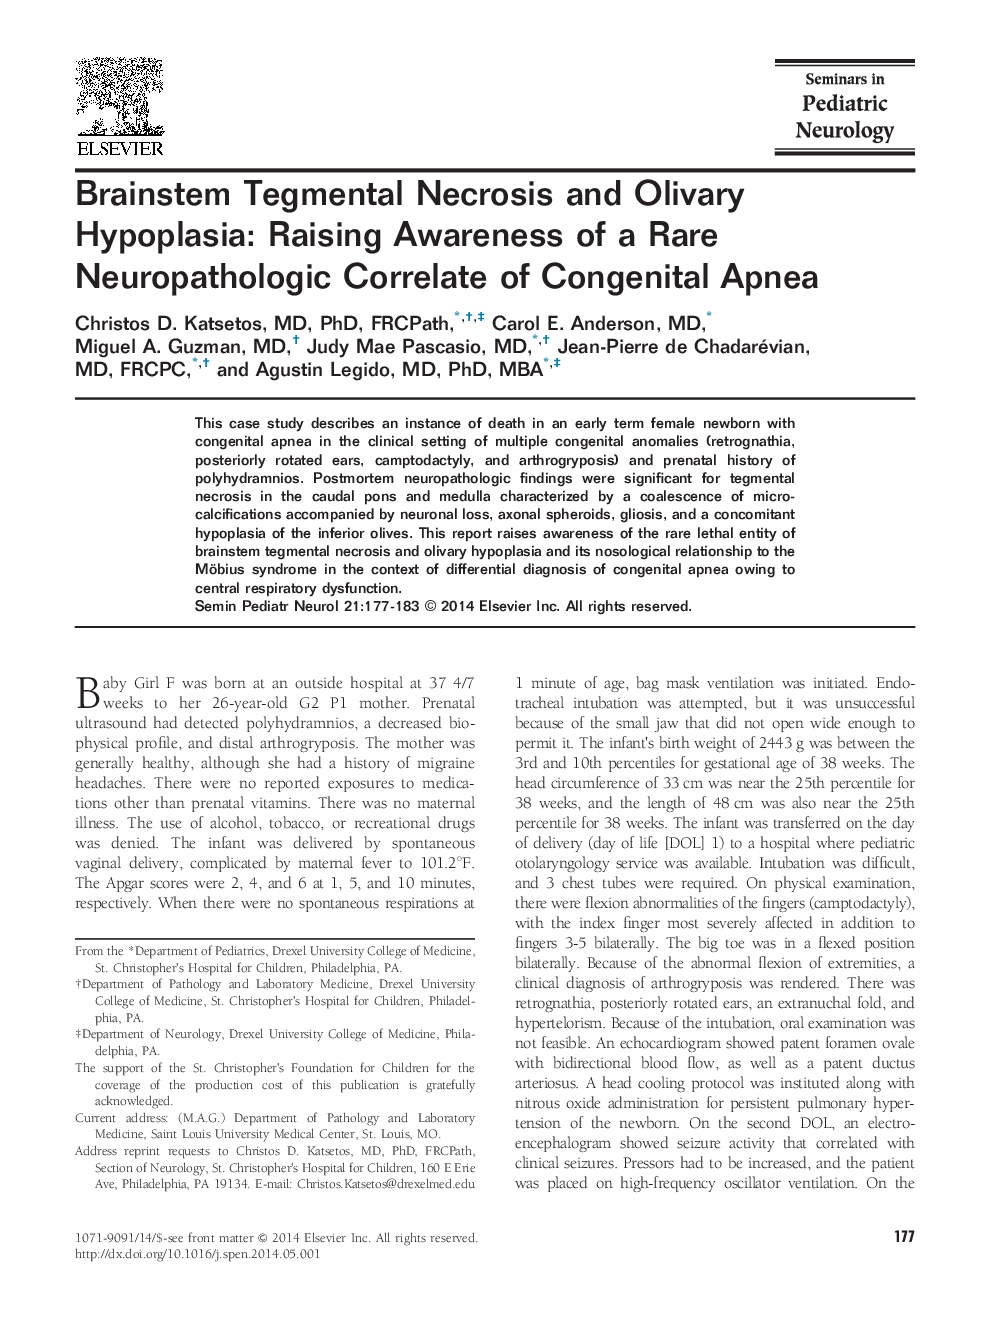 Brainstem Tegmental Necrosis and Olivary Hypoplasia: Raising Awareness of a Rare Neuropathologic Correlate of Congenital Apnea